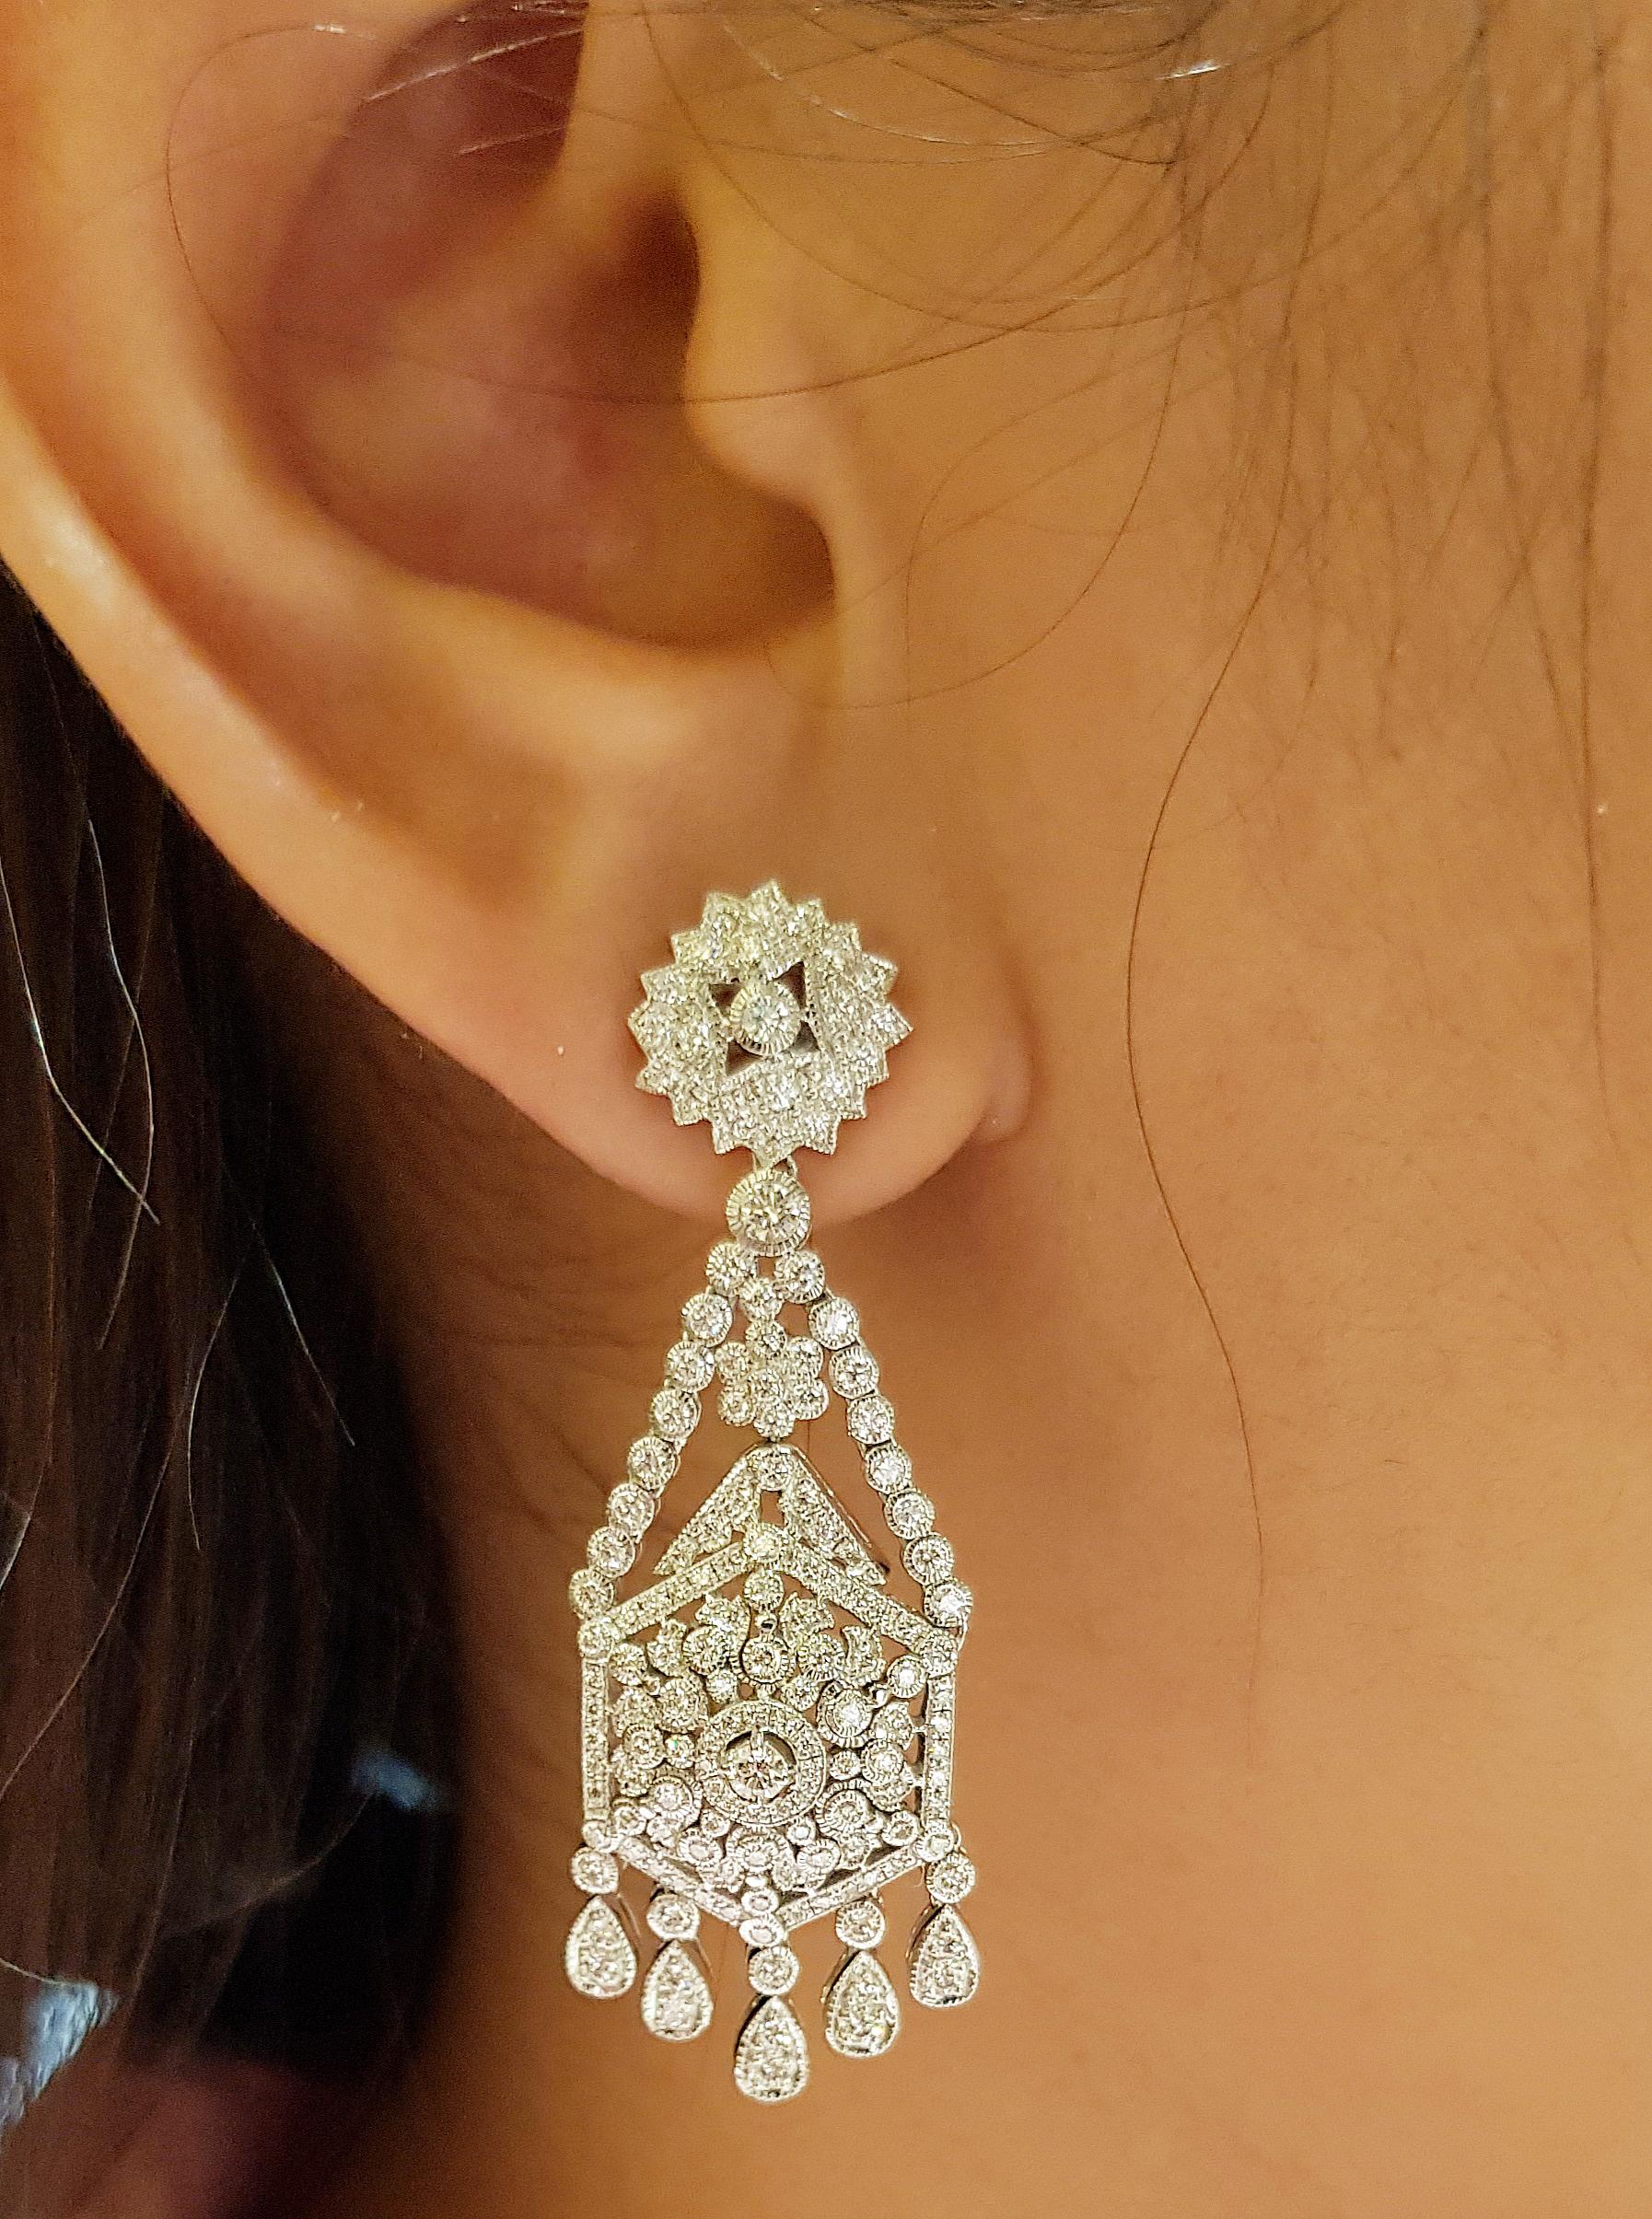 Diamond 1.59 carats Earrings set in 18 Karat White Gold Settings

Width:  1.6 cm 
Length: 4.5 cm
Total Weight: 14.16 grams

